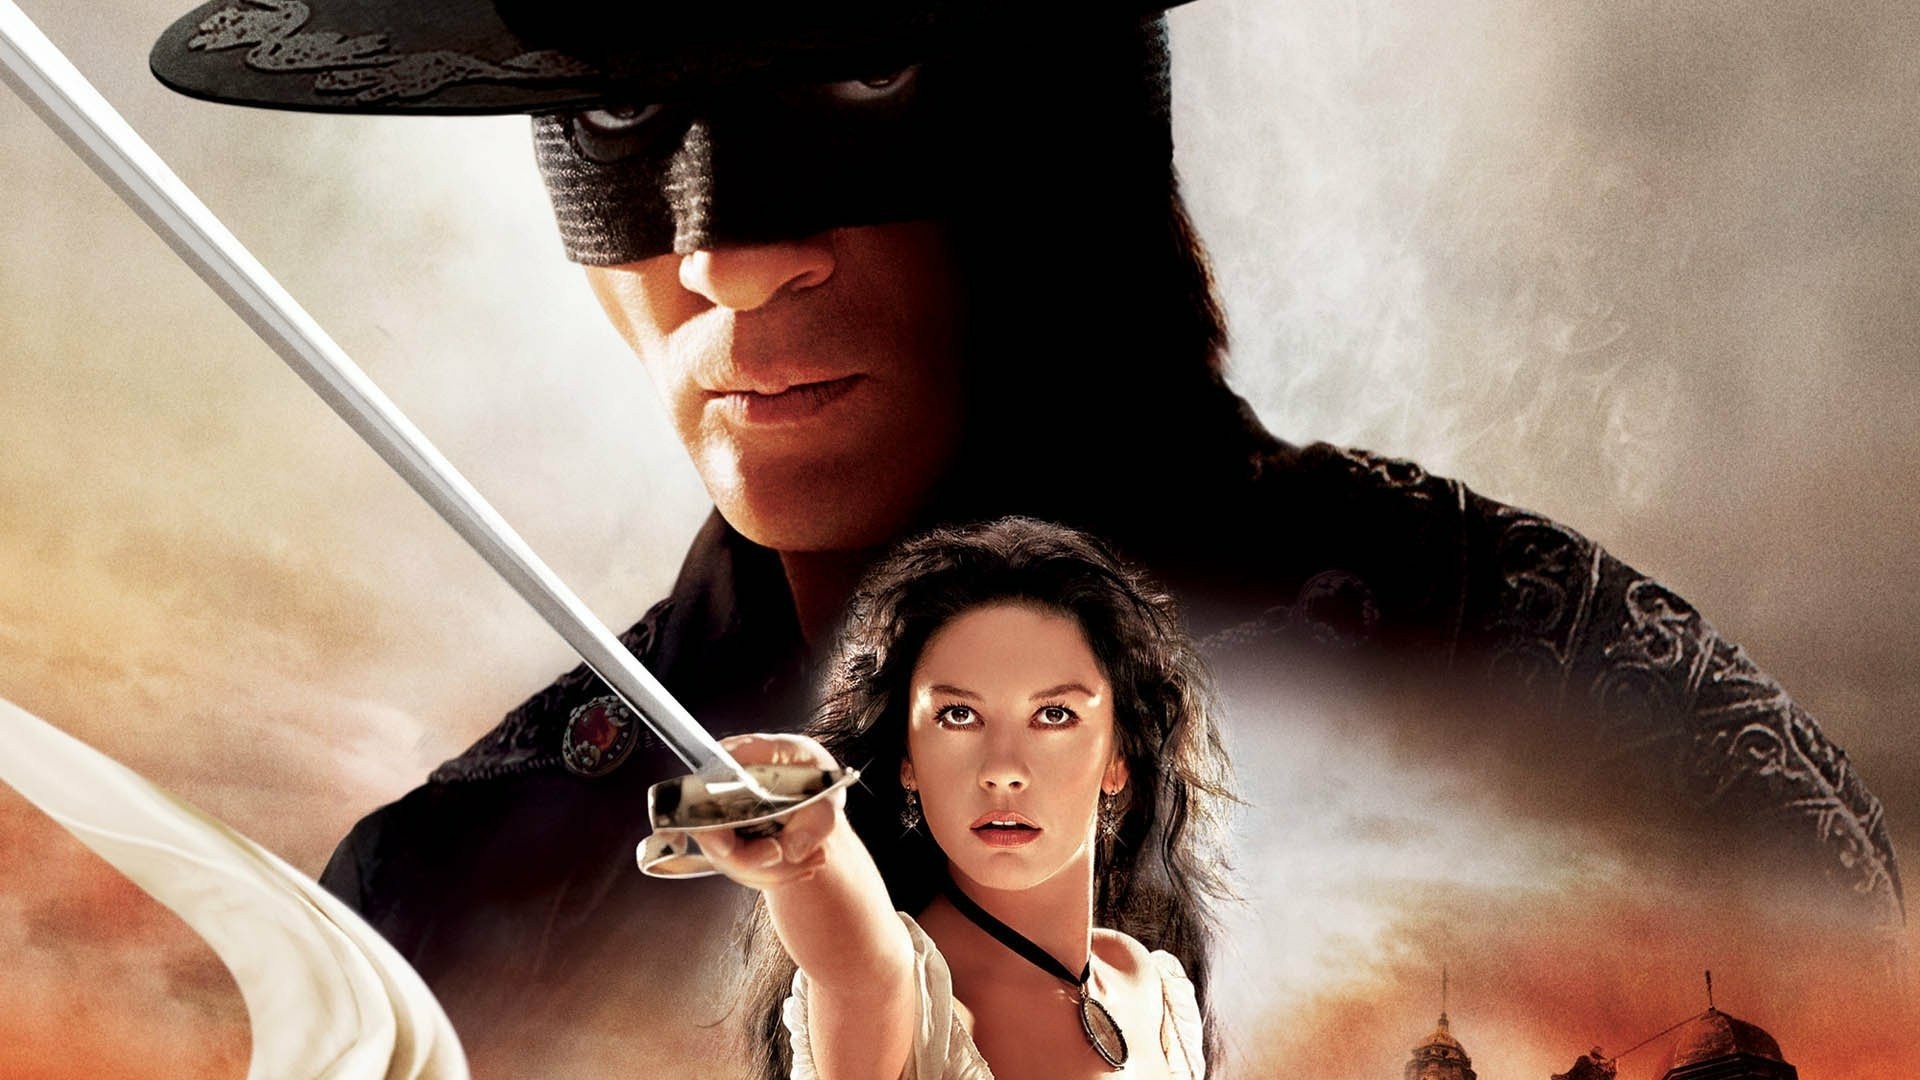 The Legend of Zorro: The film earned $142.4 million on a $65 million budget. 1920x1080 Full HD Wallpaper.